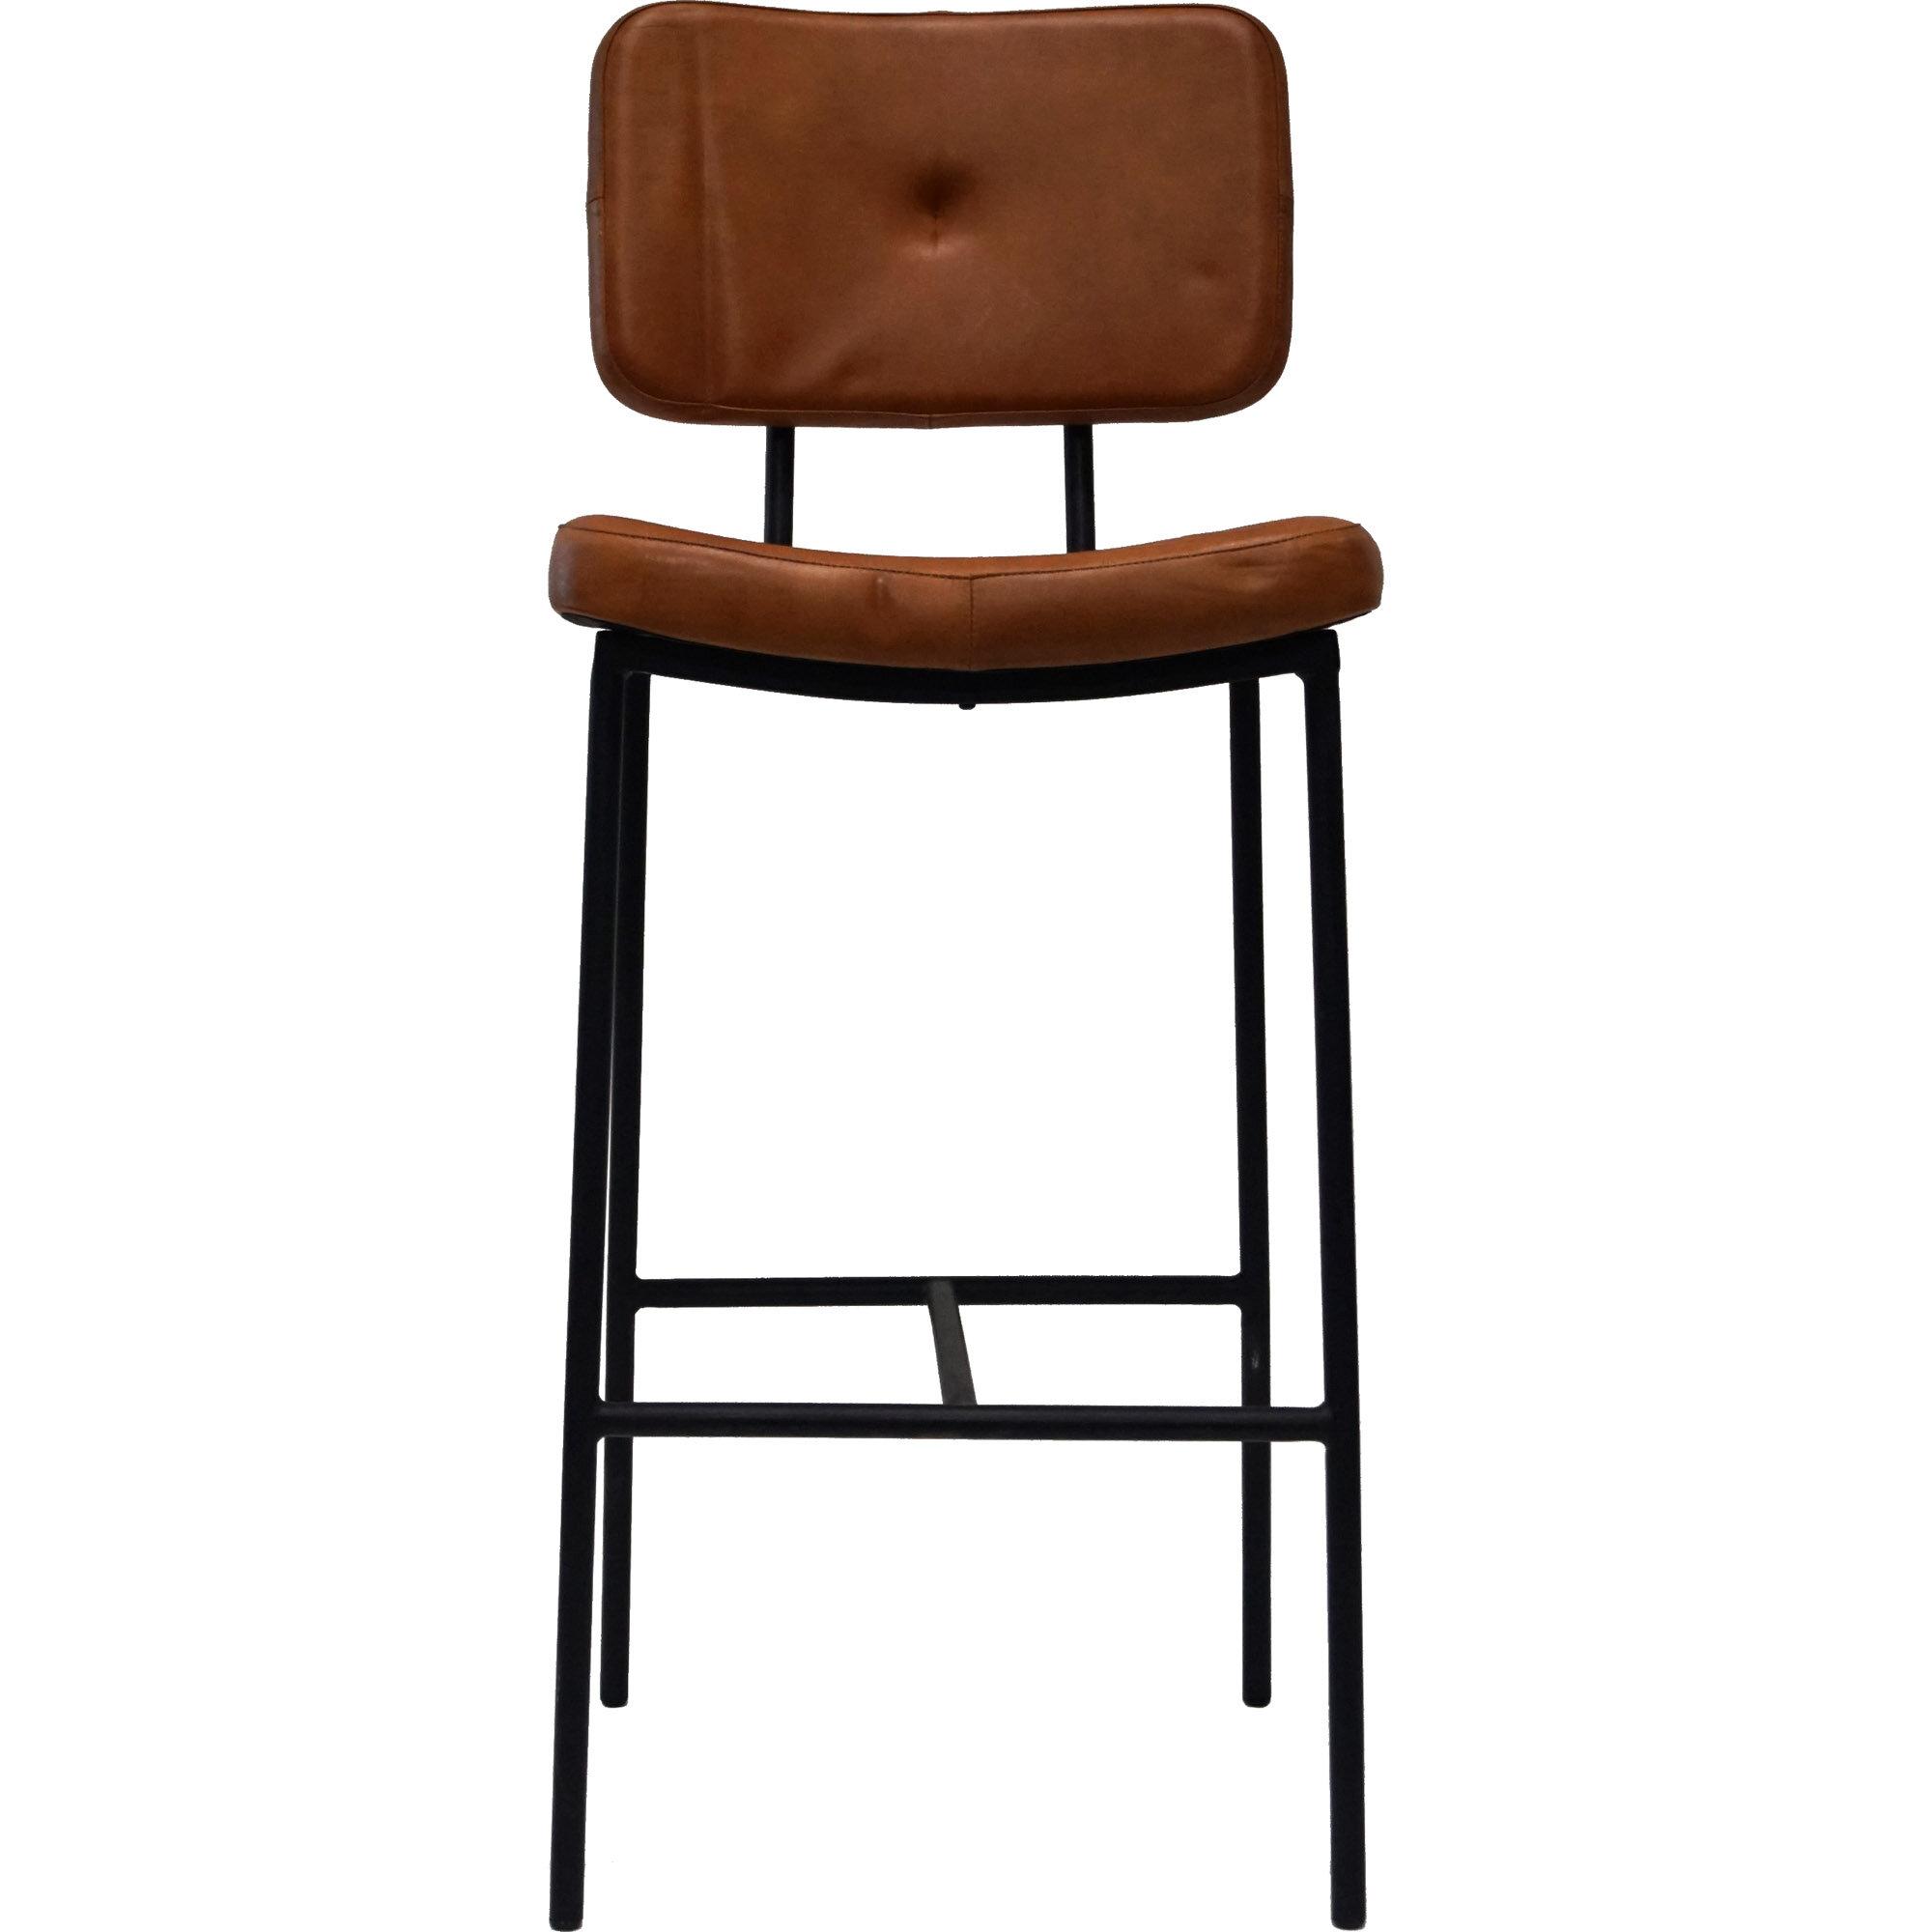  Calm barstol med polstret læder sæde og ryg fra Trademark Living i Jern (Varenr: MA1136)